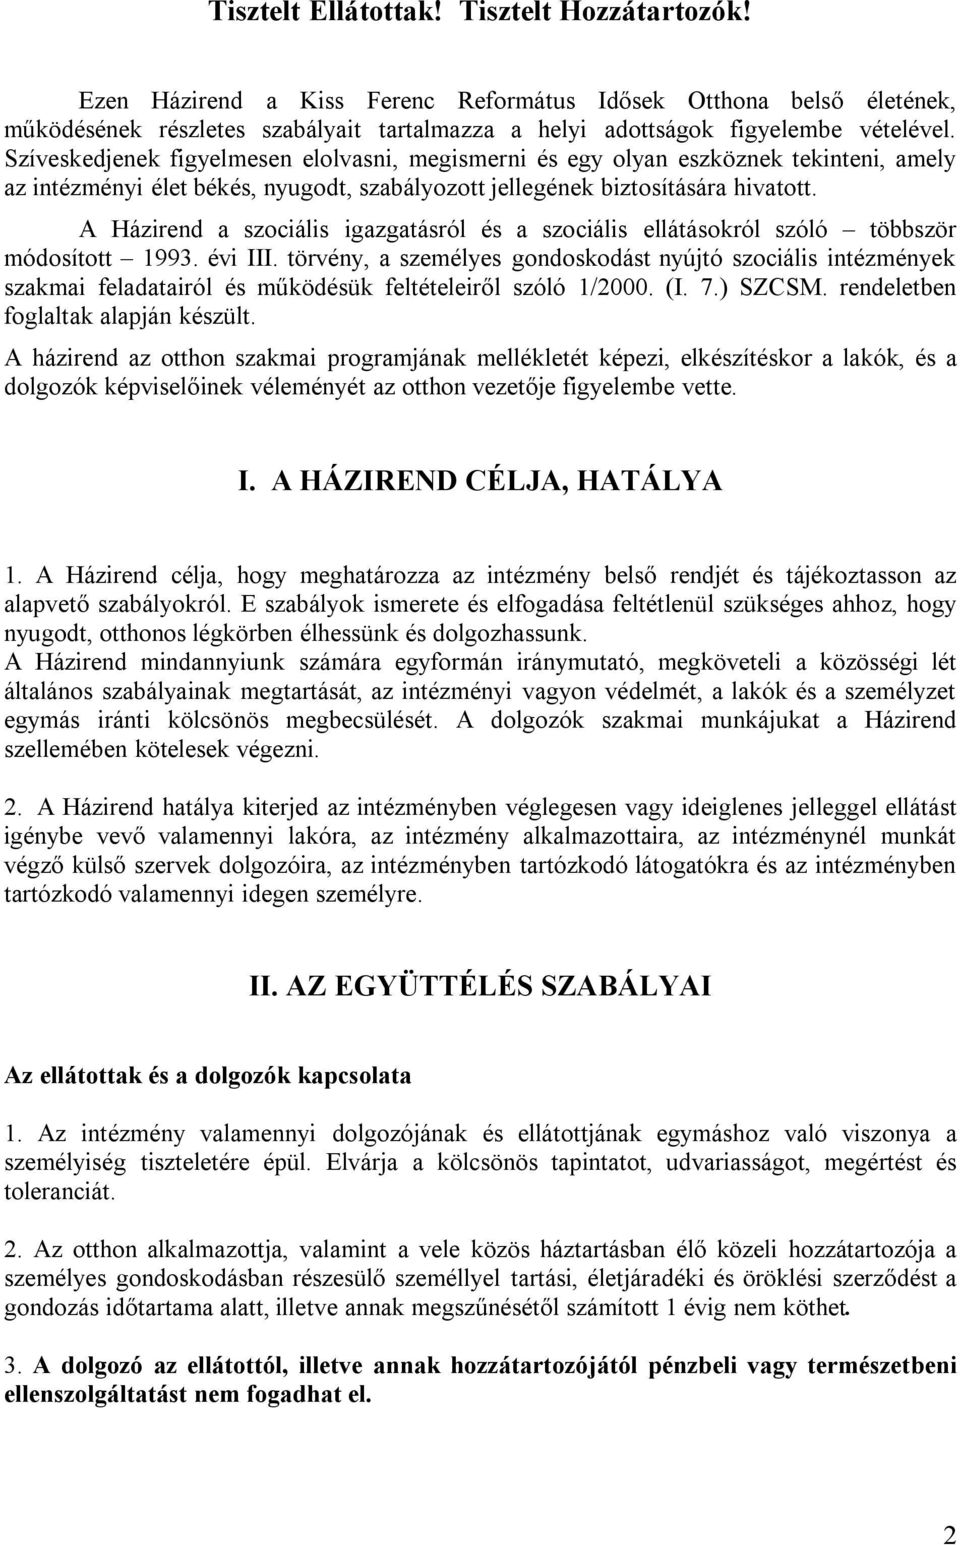 Kiss Ferenc Református 7257 Mosdós, Petőfi S. u. 4. Idősek Otthona : ;  idosotthonmosdos@fre . - PDF Free Download